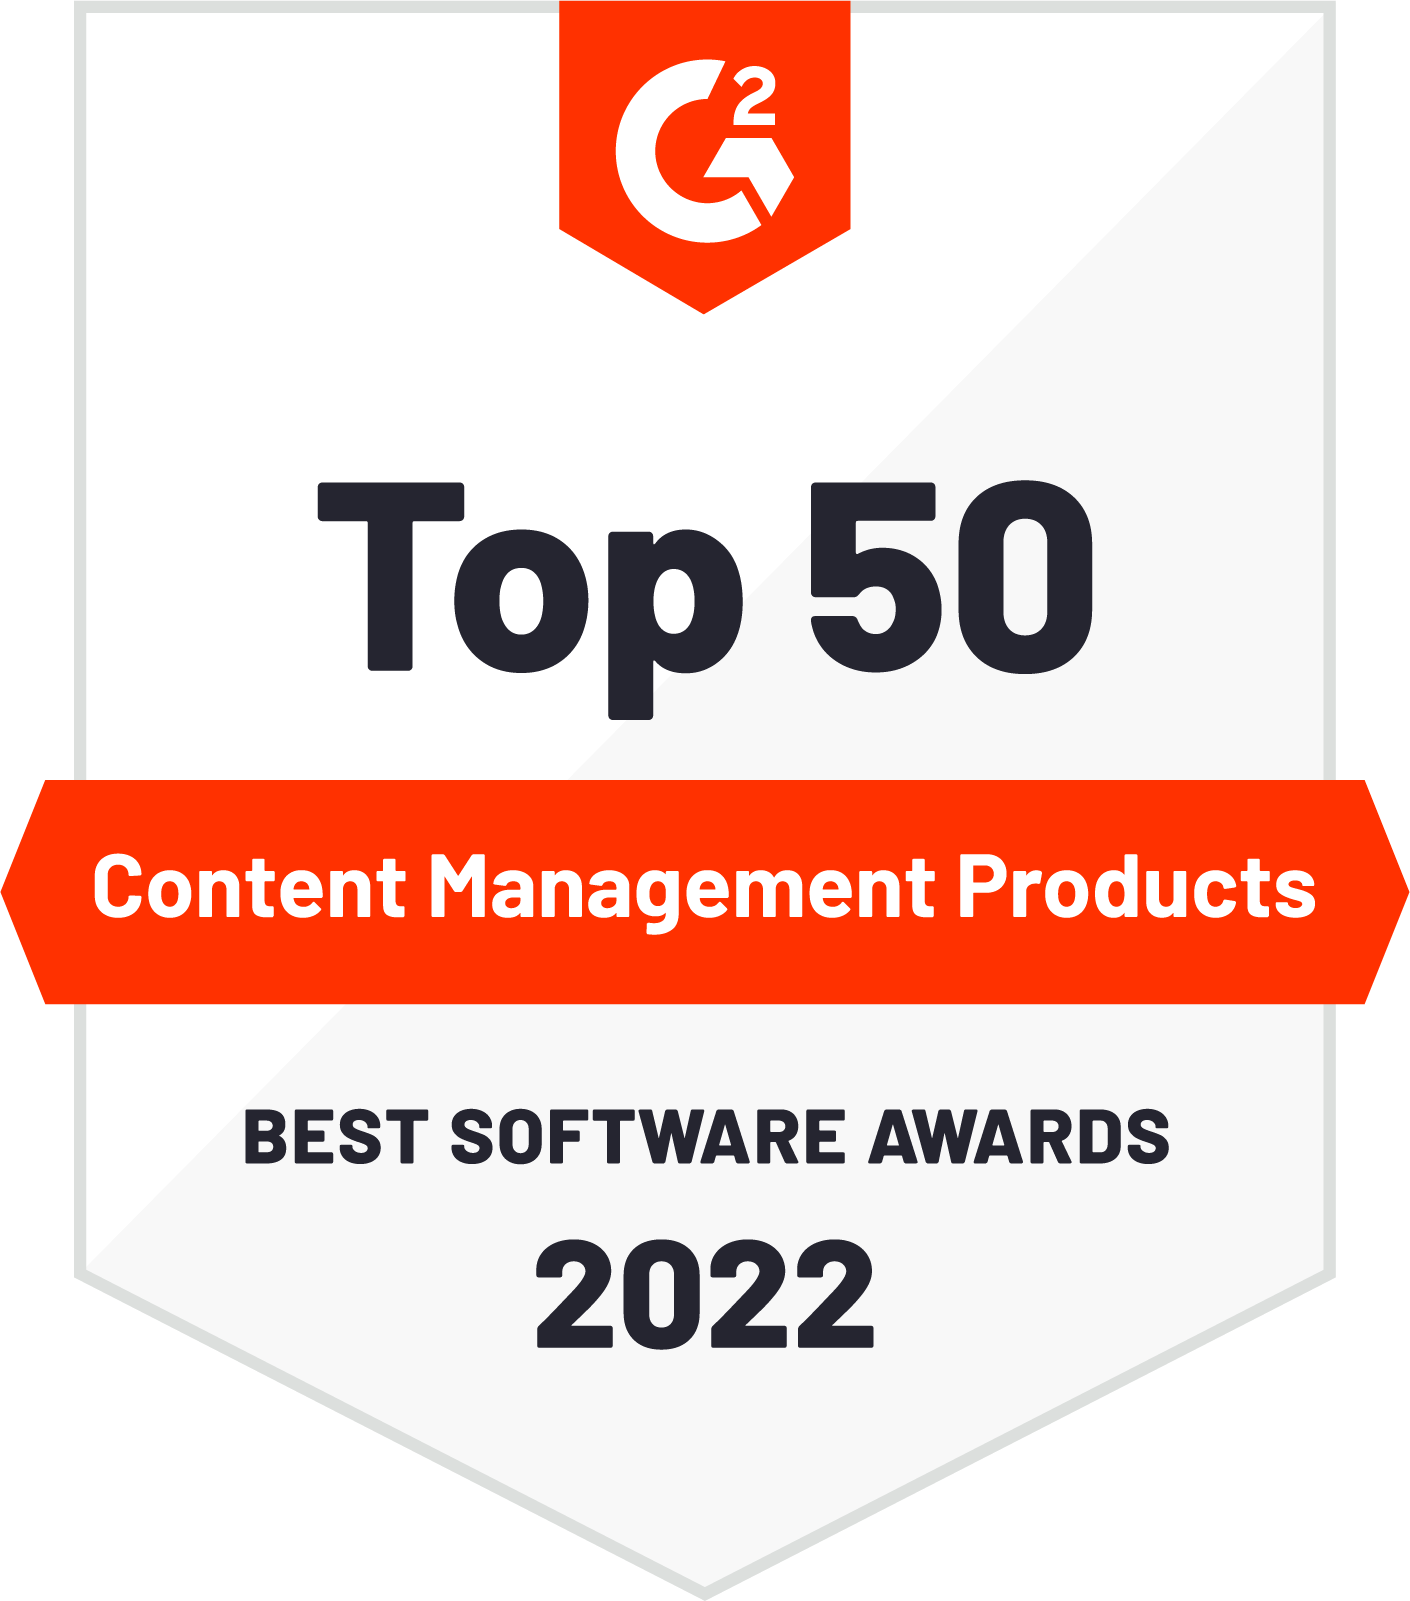 g2 best software 2022 badge content management